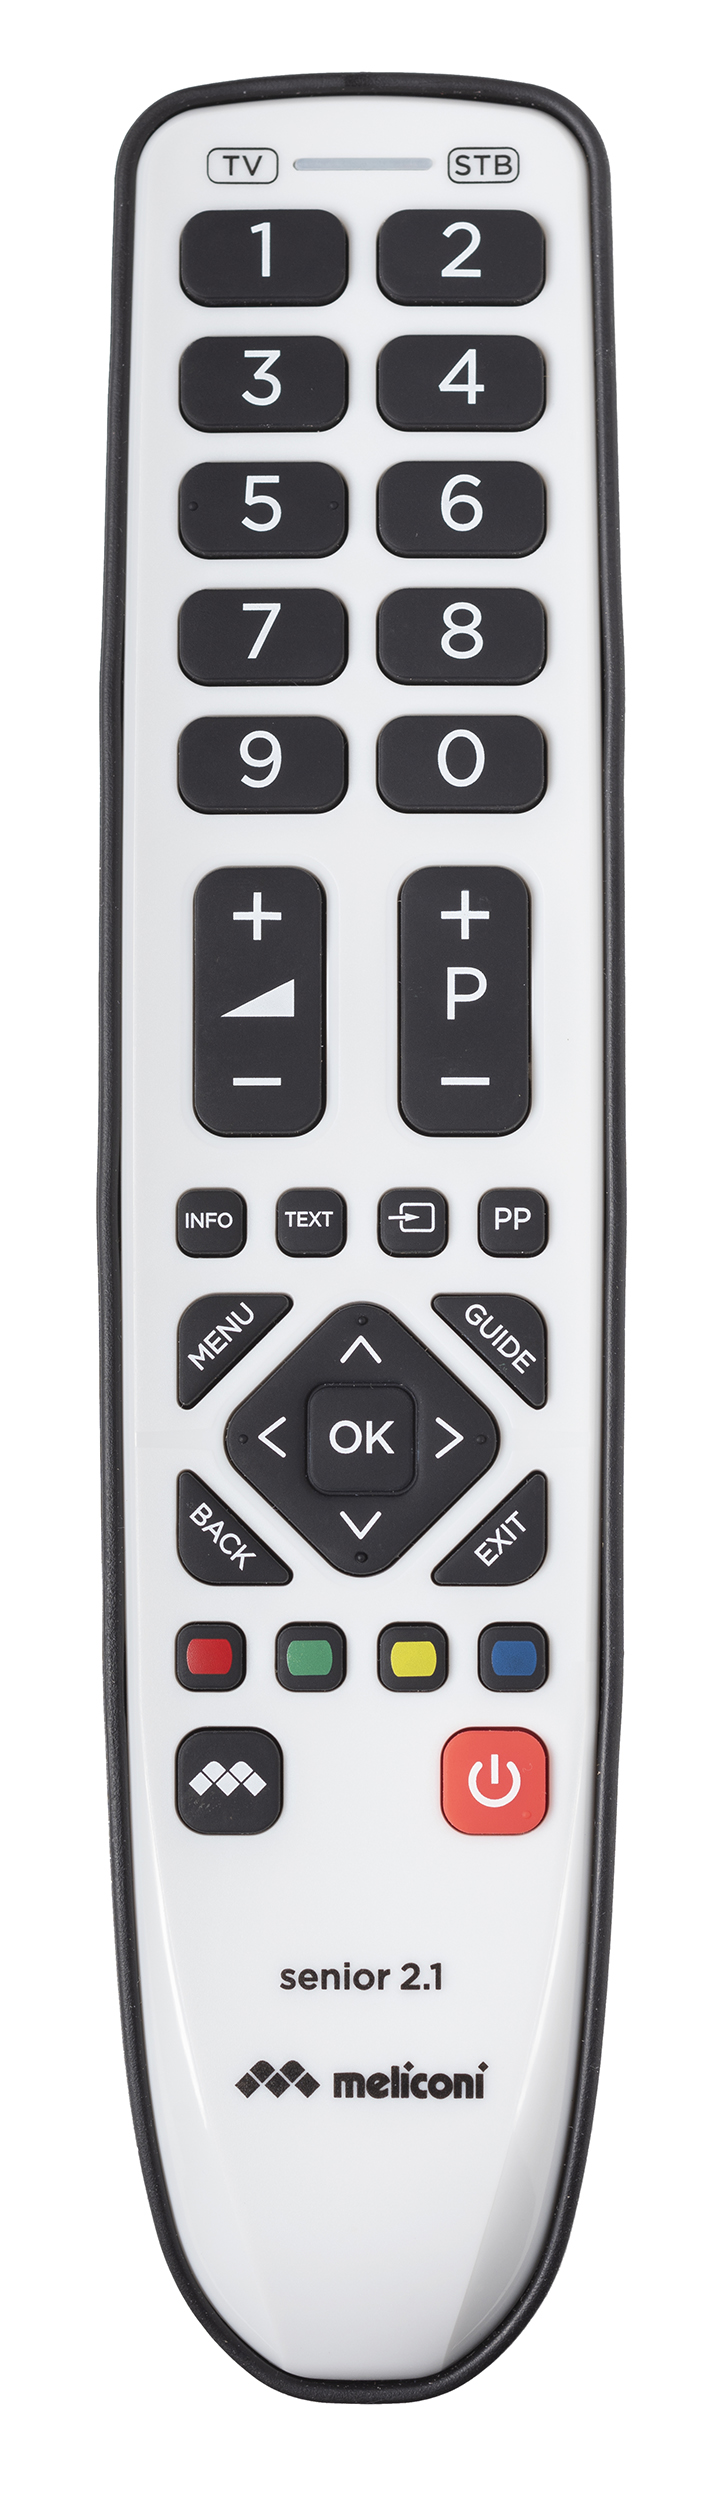 Gumbody senior 2.1, universal remote control tv & decoder rubber body, gray